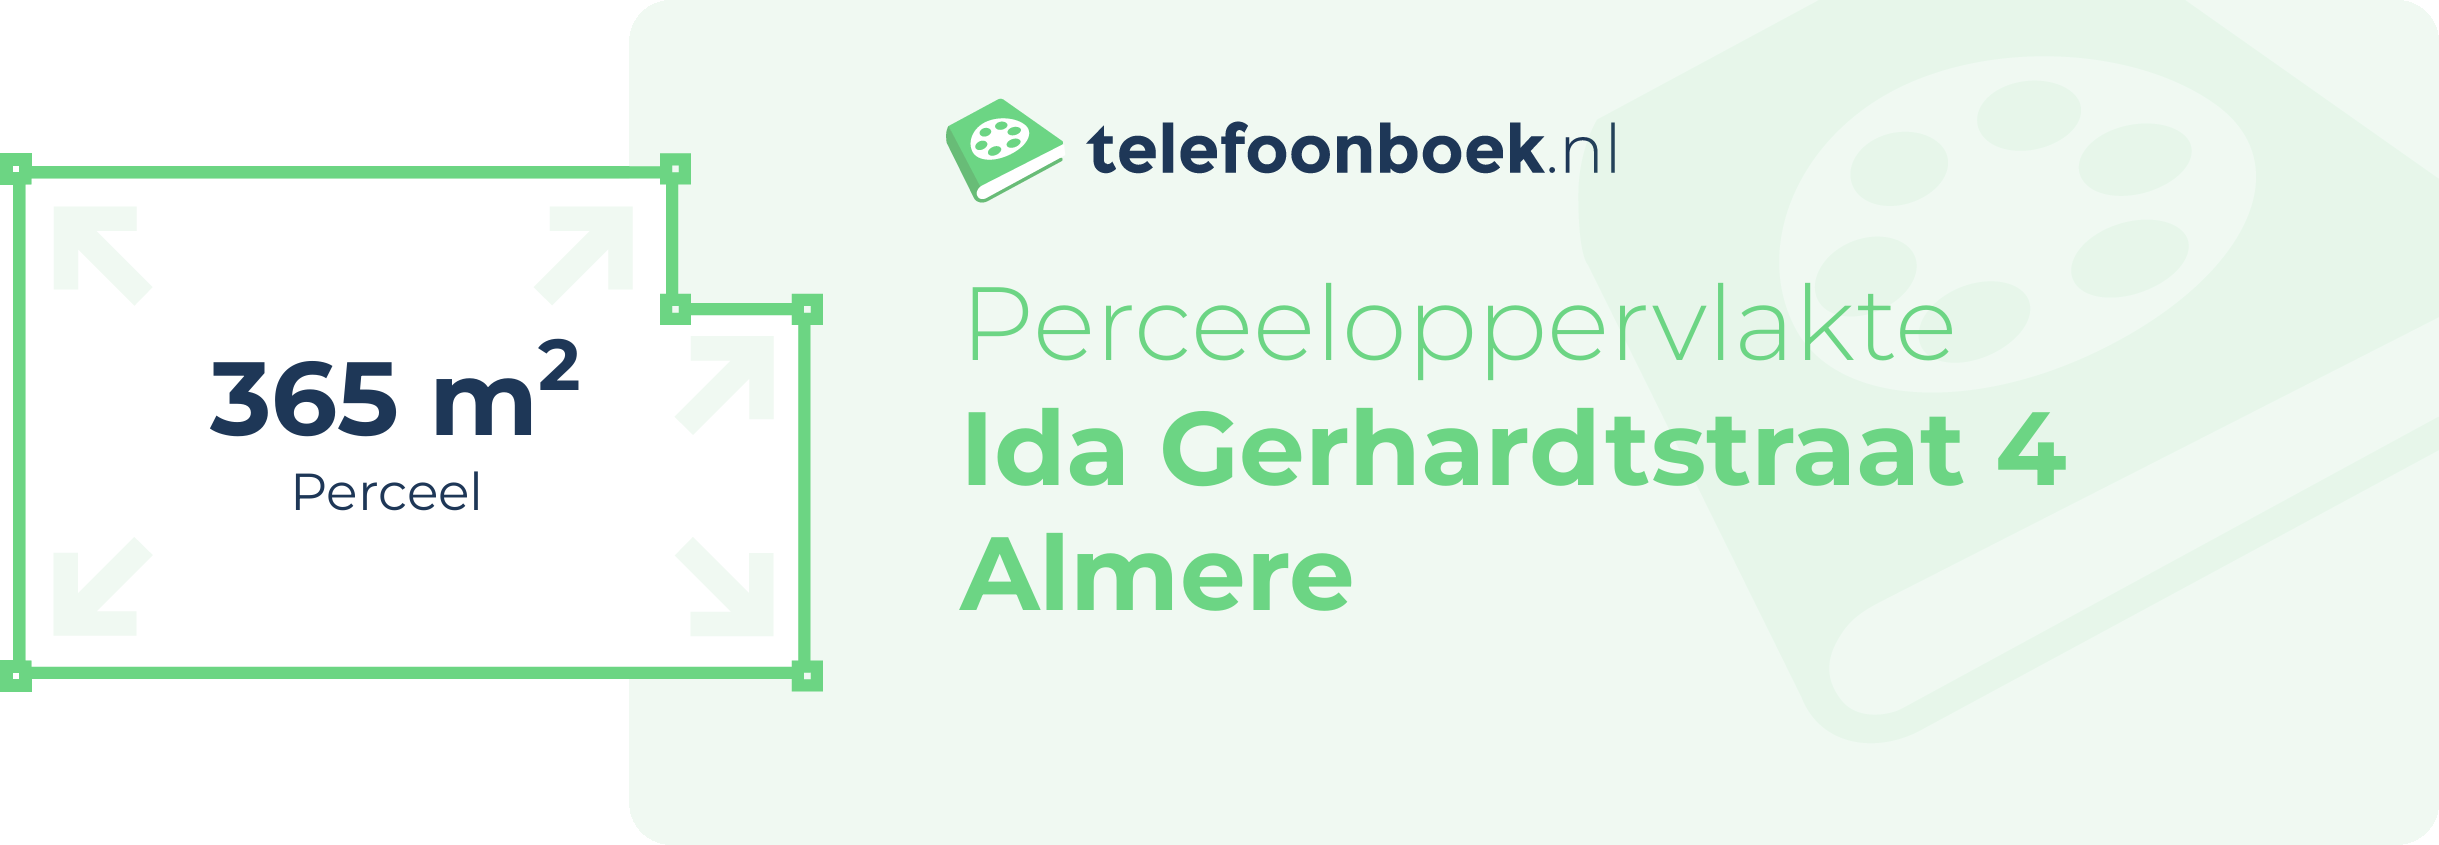 Perceeloppervlakte Ida Gerhardtstraat 4 Almere